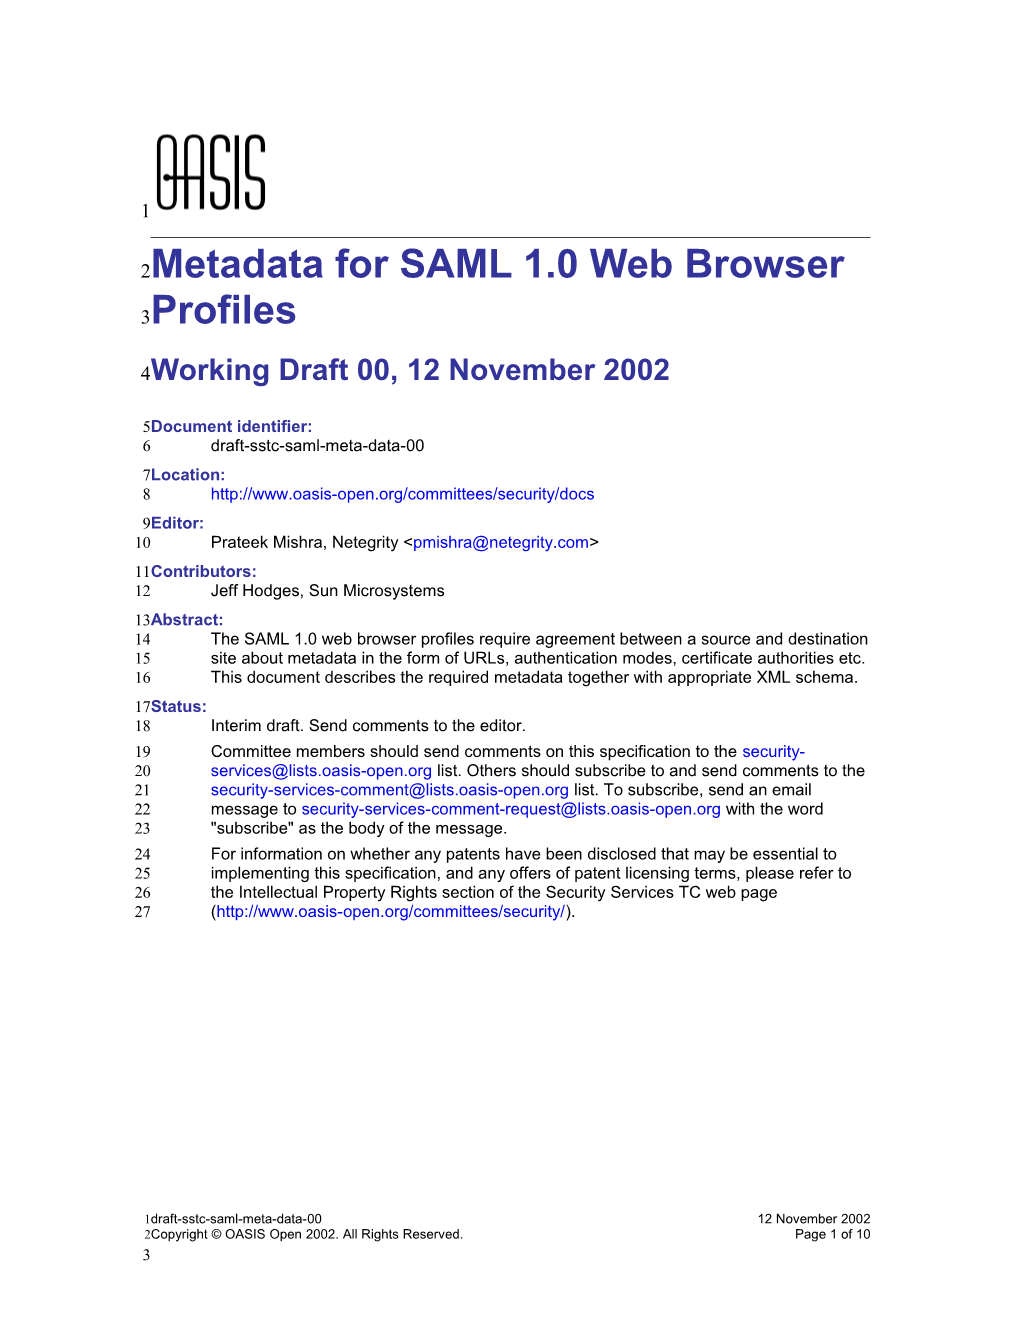 Metadata for SAML 1.0 Web Browser Profiles